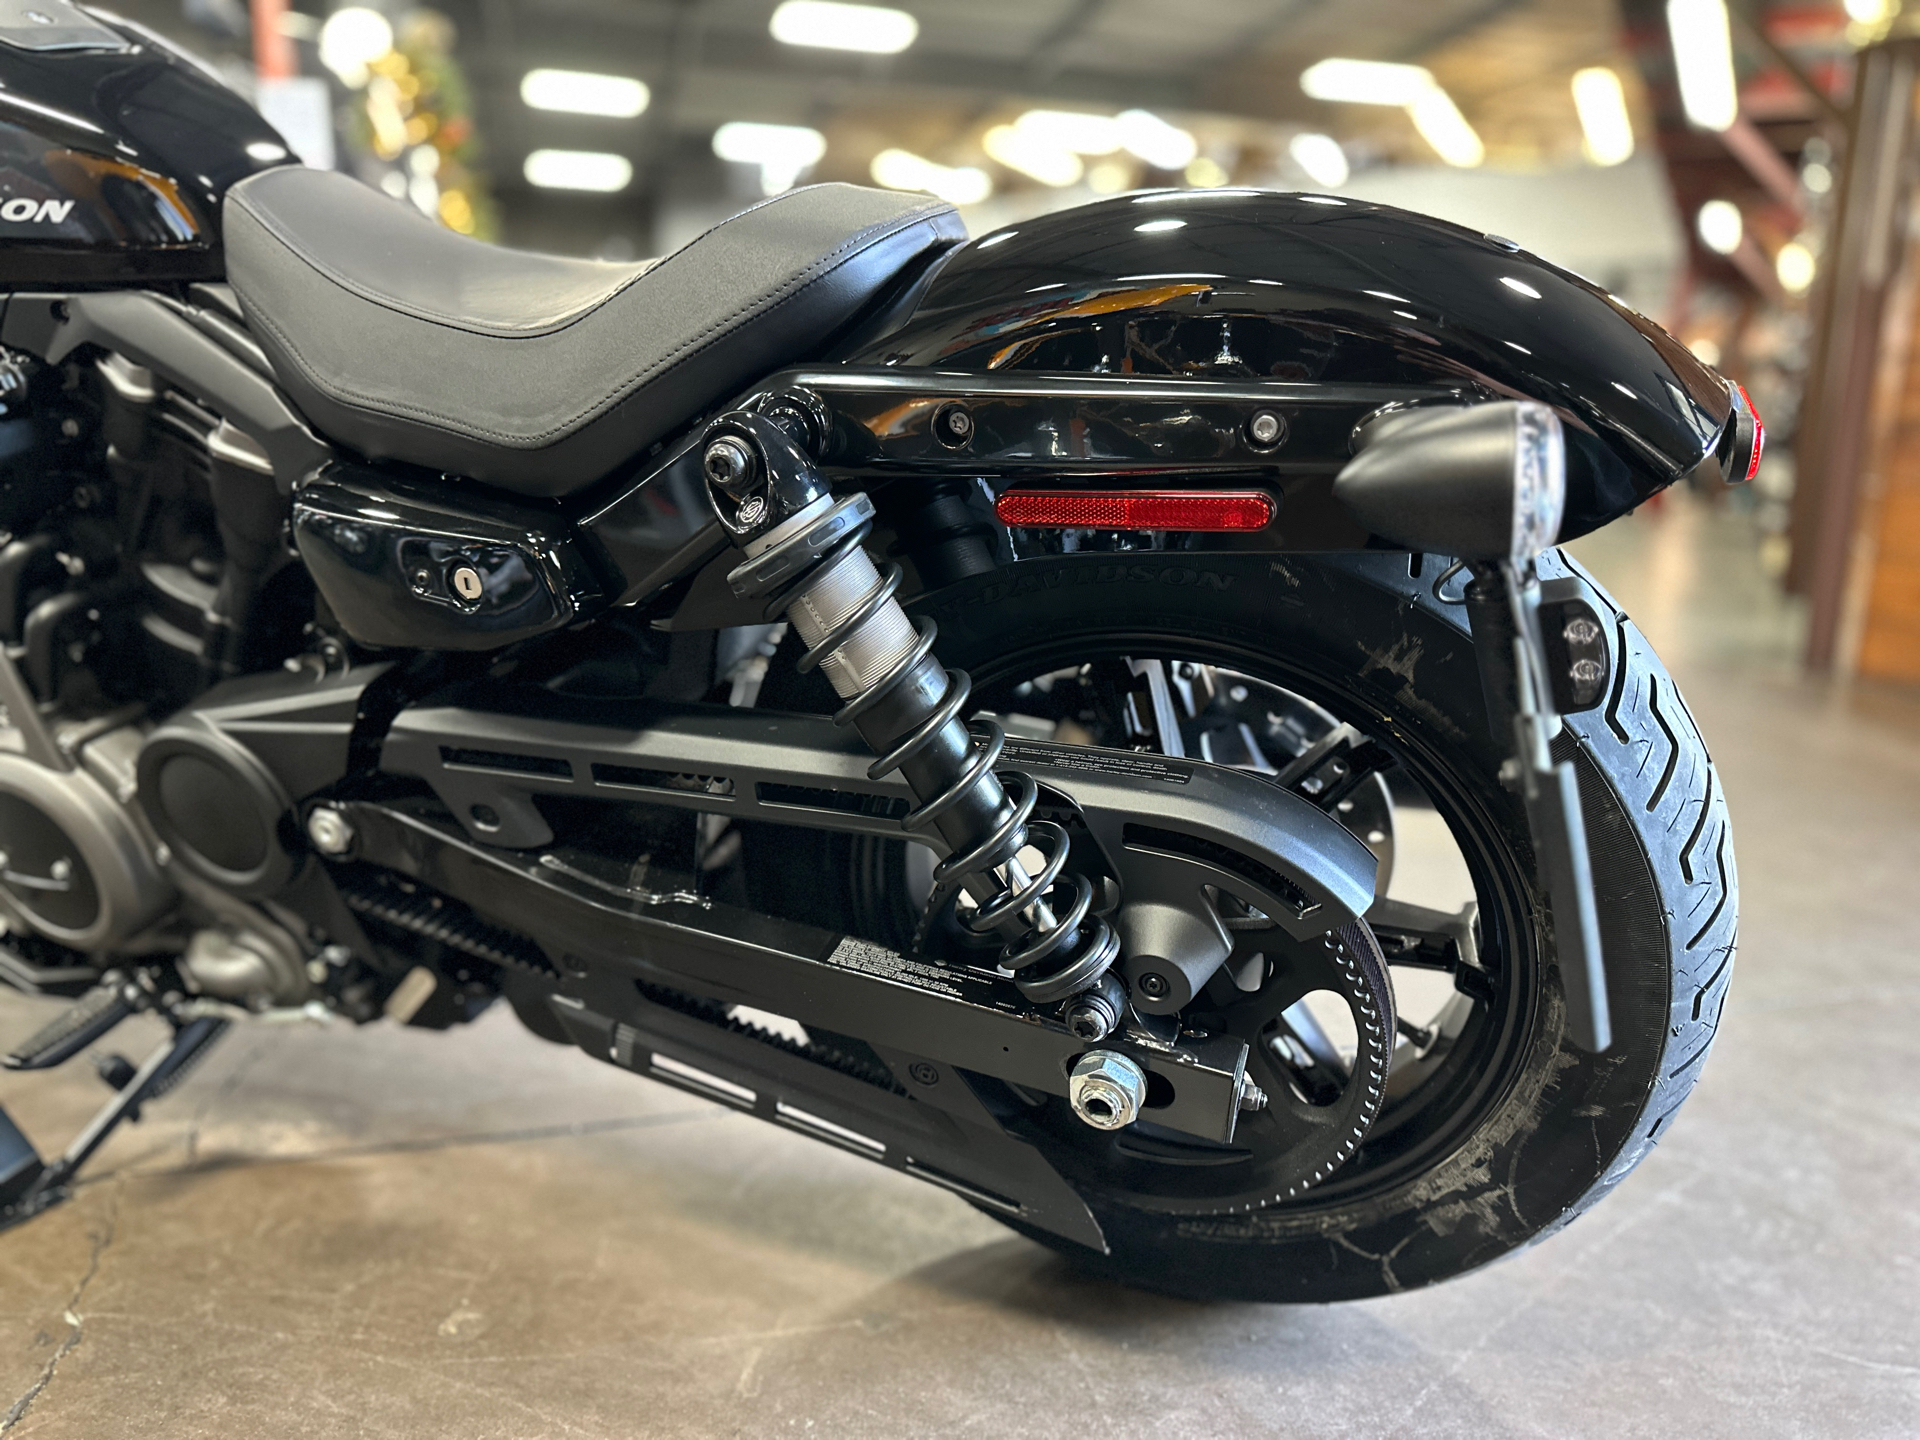 2022 Harley-Davidson Nightster™ in San Jose, California - Photo 8